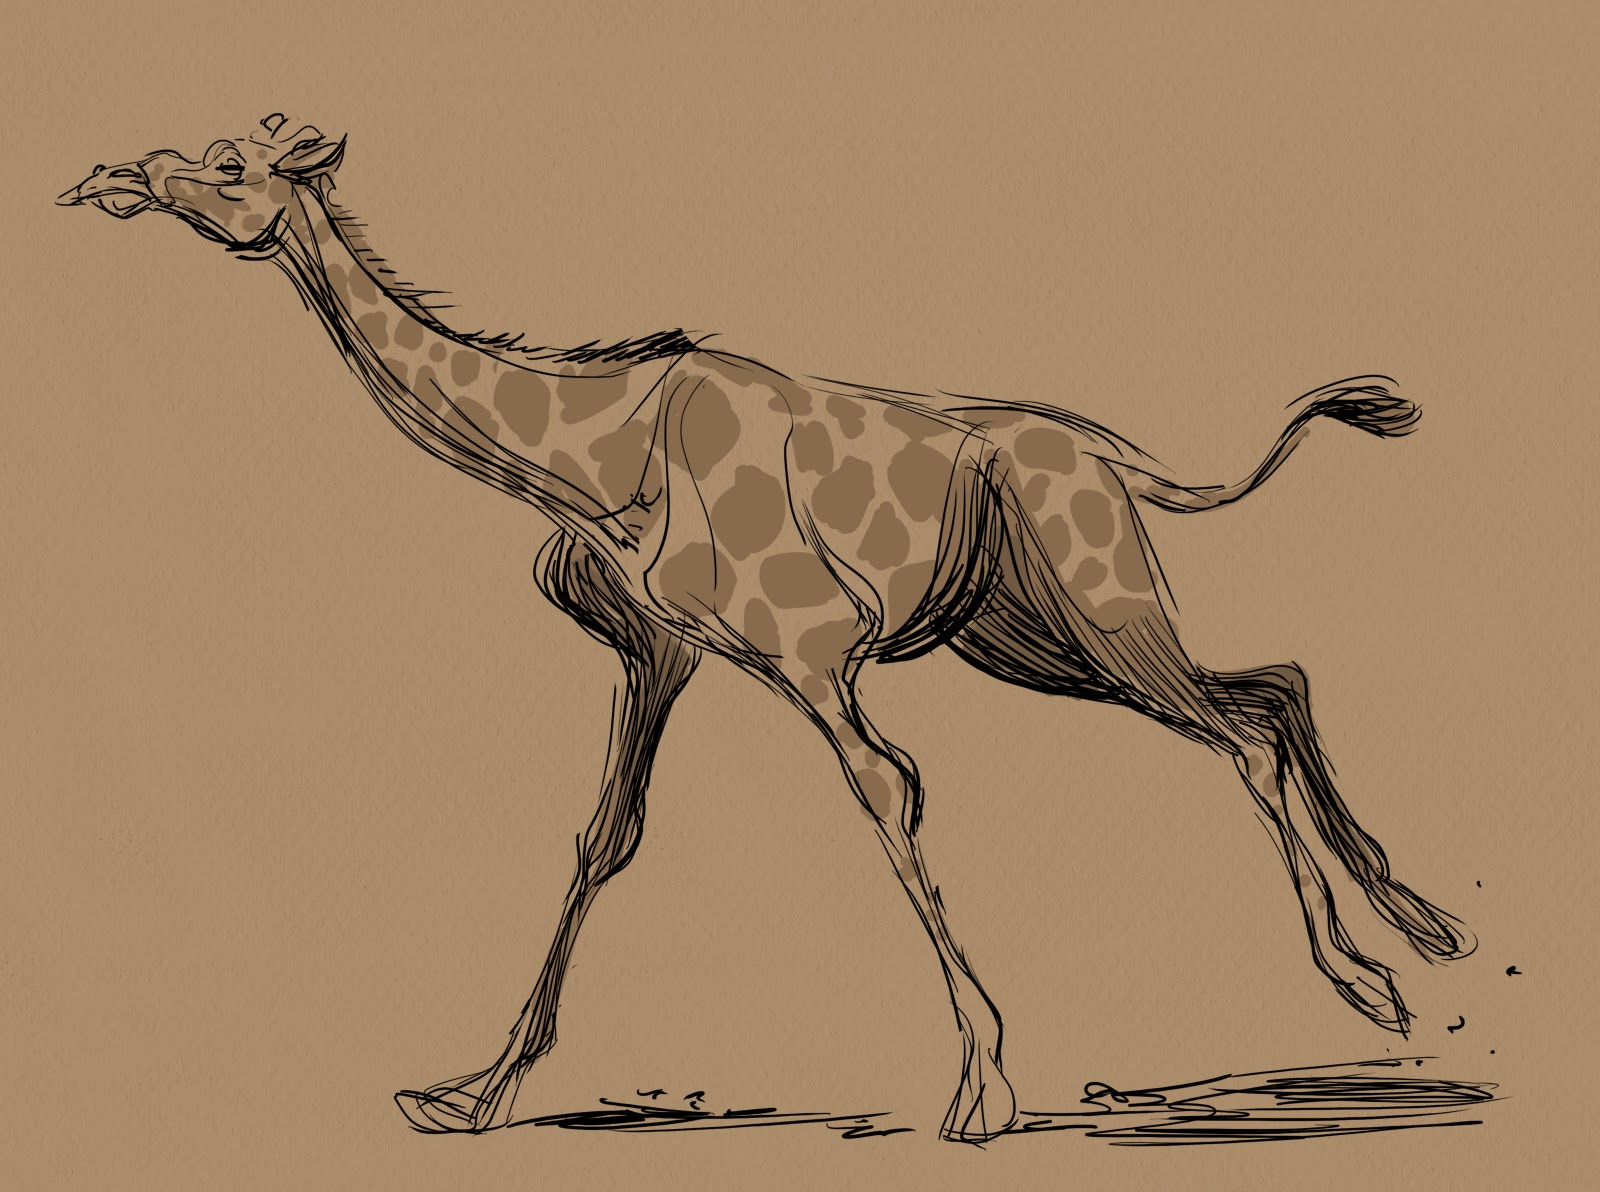 Animal and Life Drawing Blog: Some Giraffe sketches.